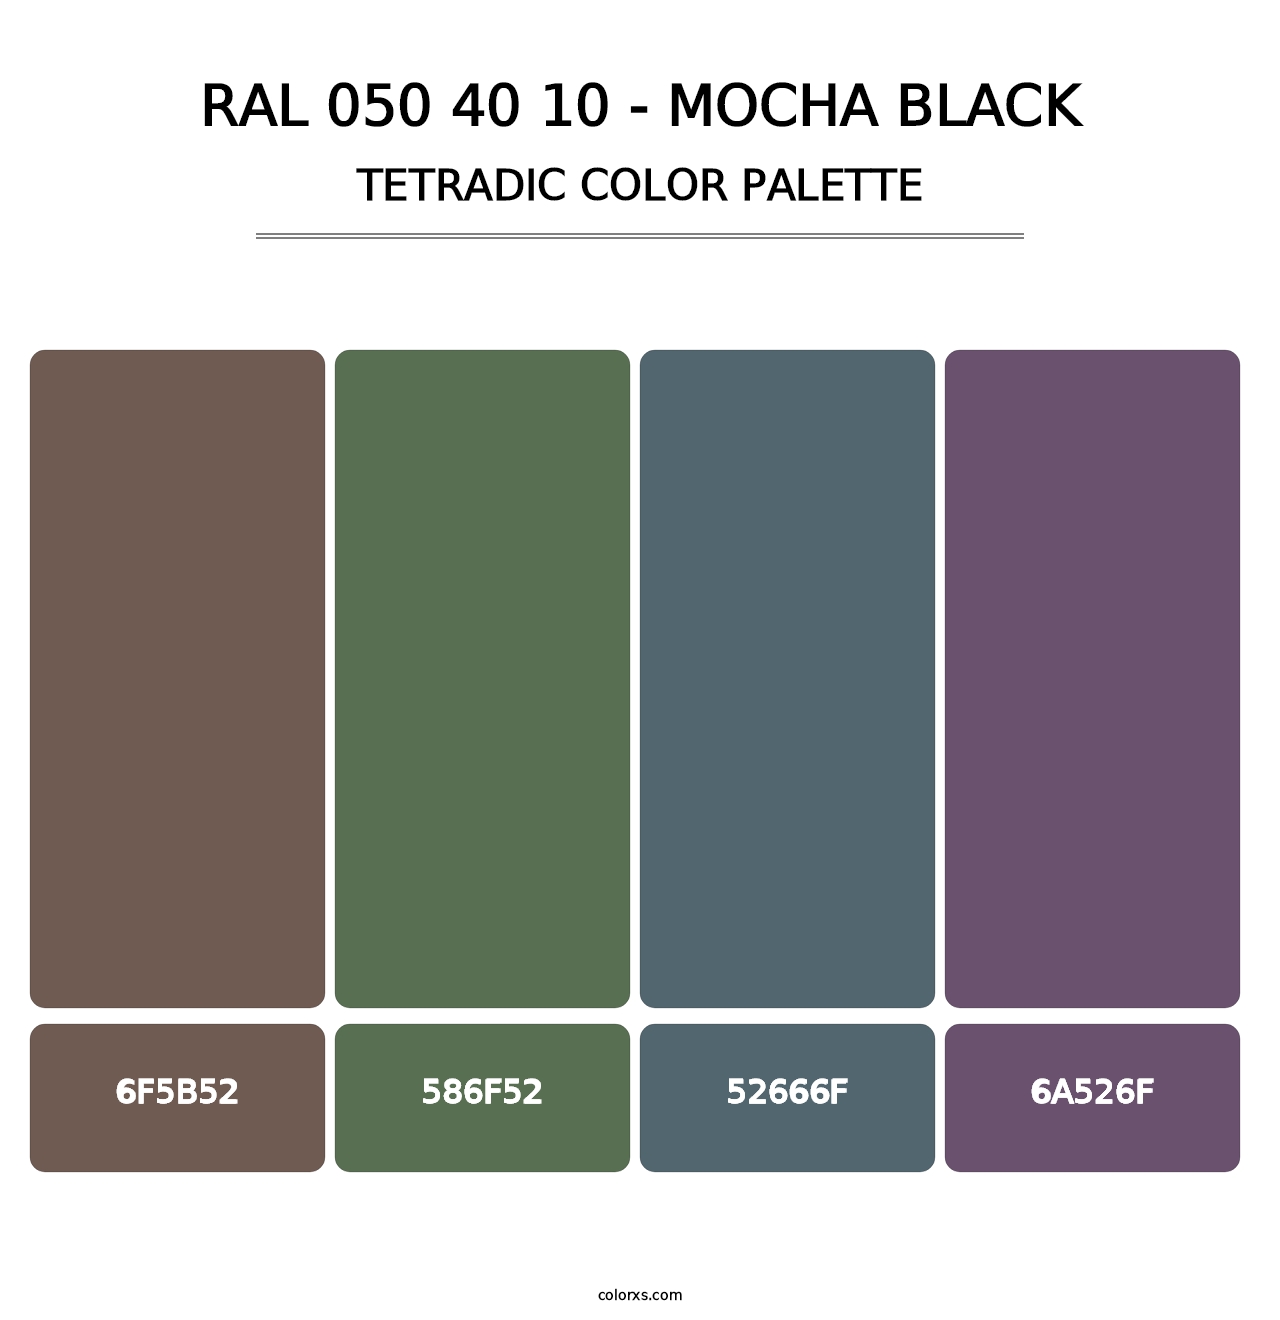 RAL 050 40 10 - Mocha Black - Tetradic Color Palette